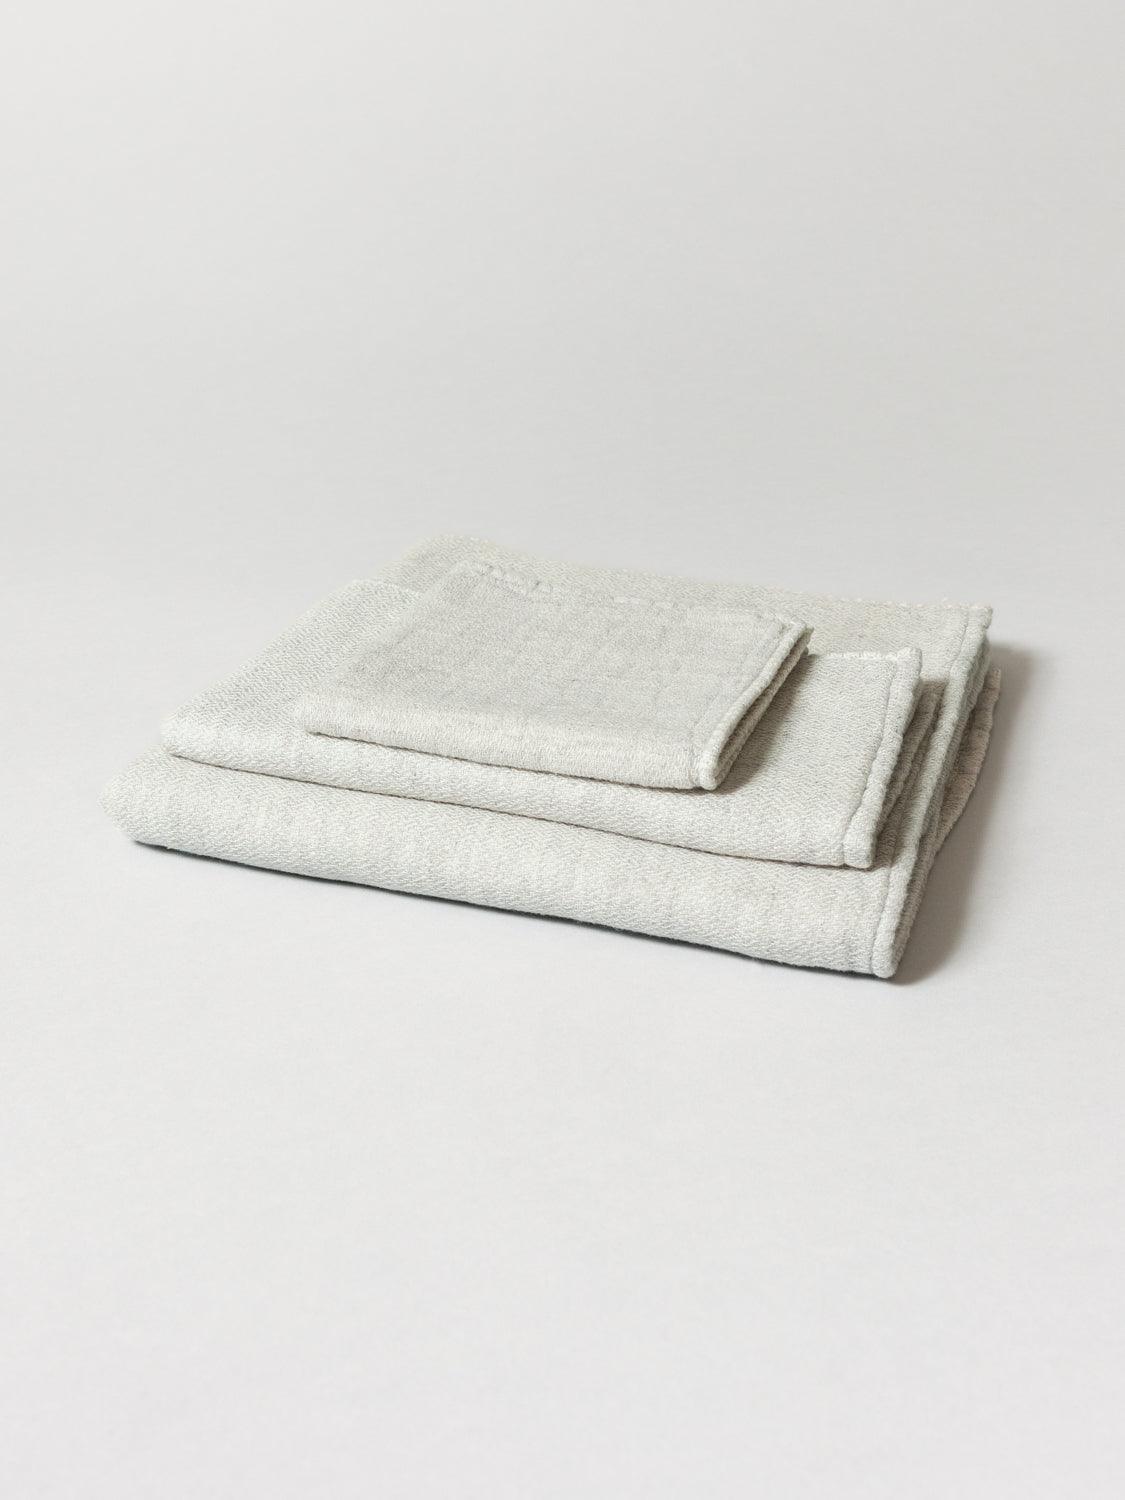 ORGANIC Cotton Kitchen or Hand Towel - Grey Shades